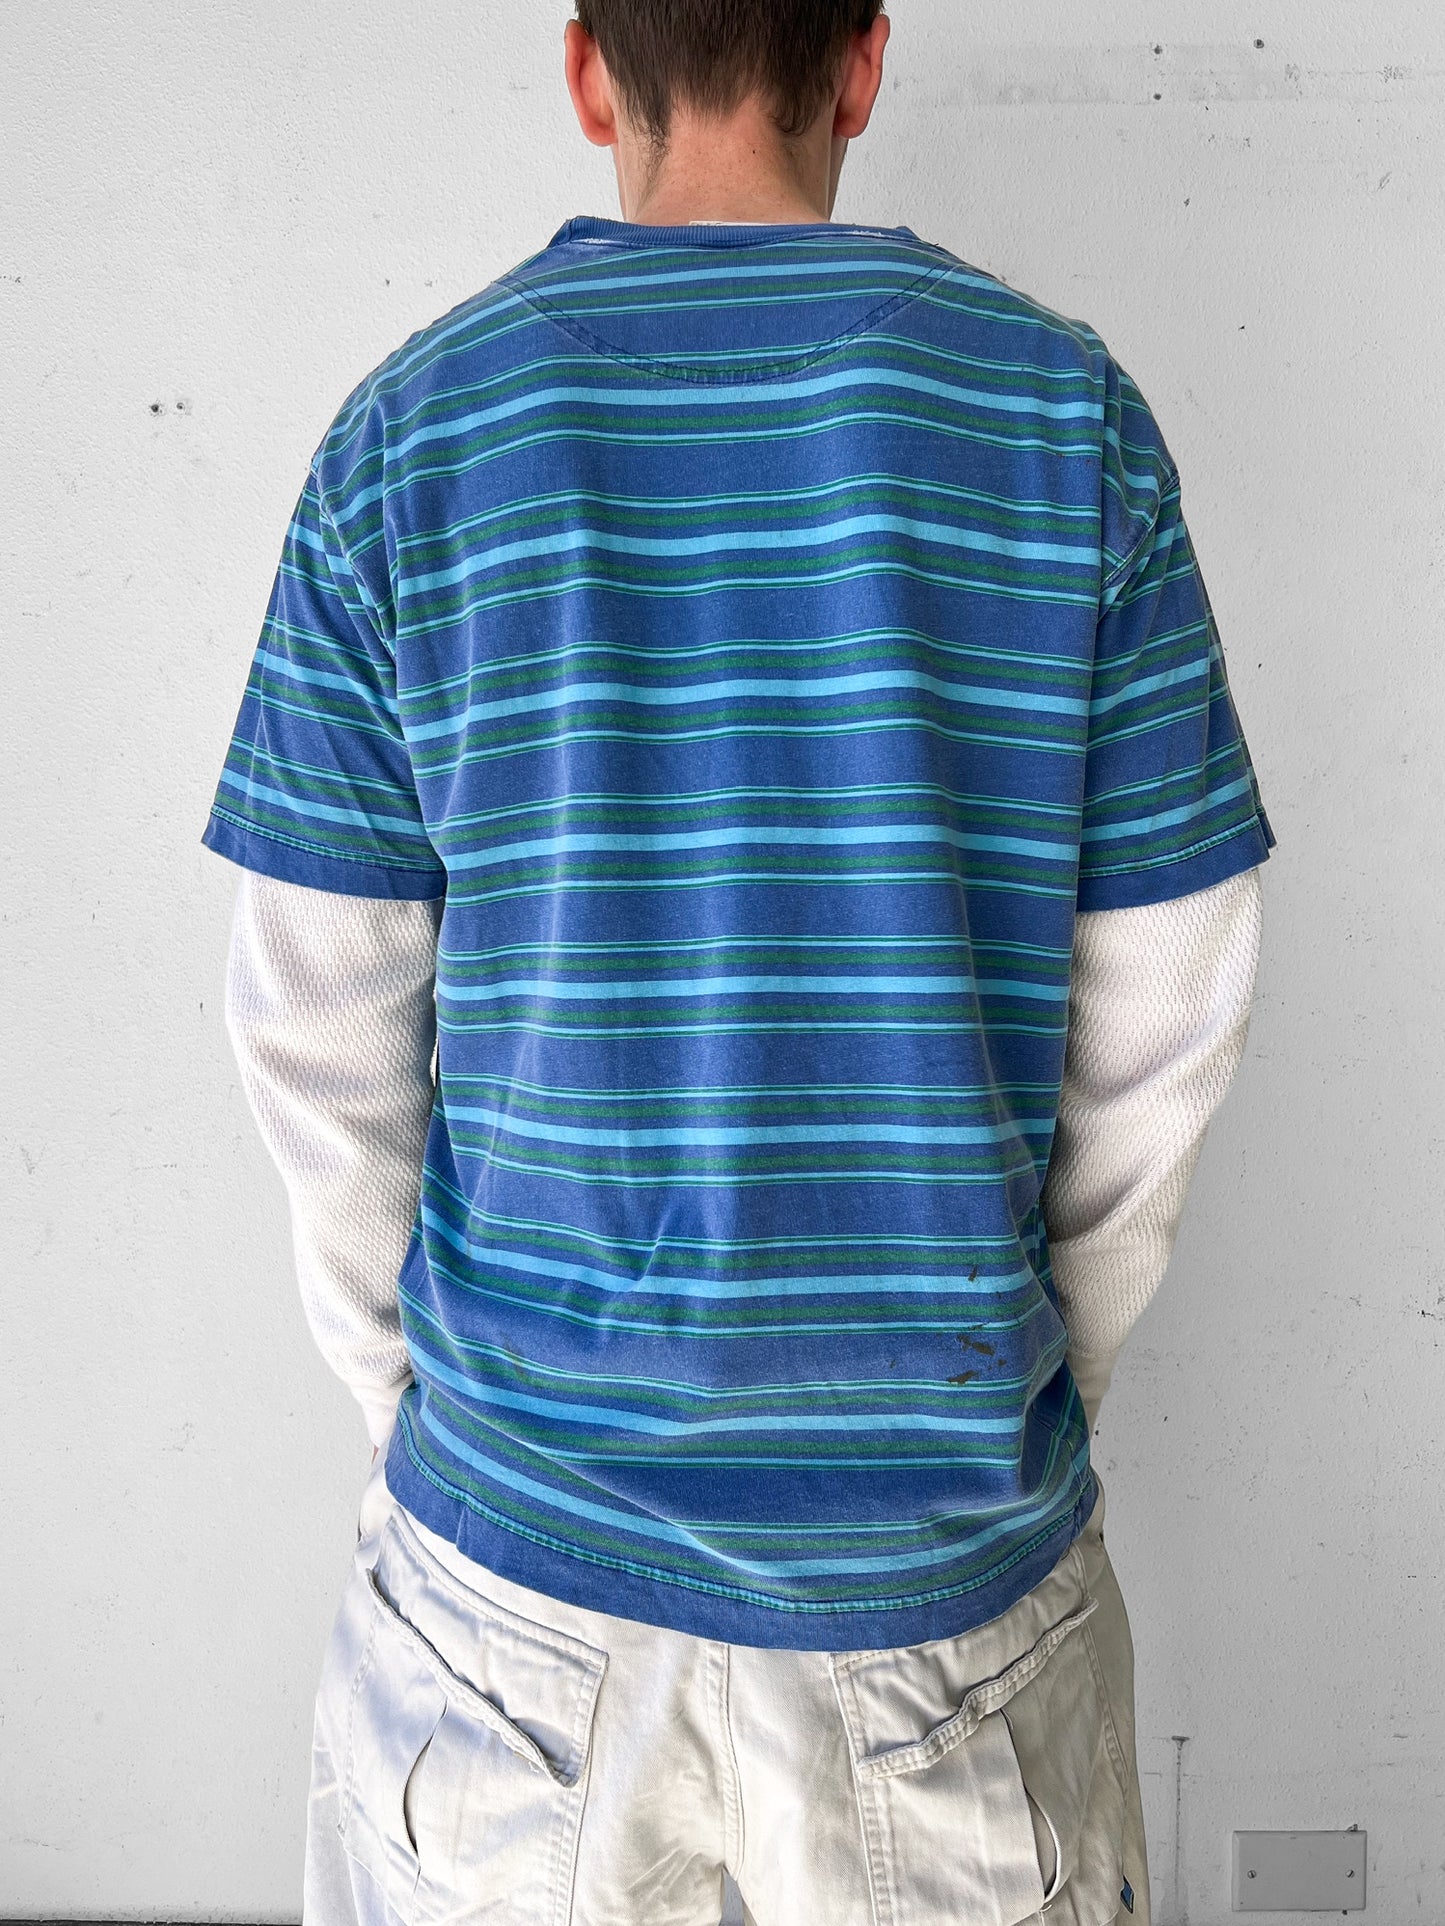 90’s Faded & Distressed GAP Striped Shirt - M